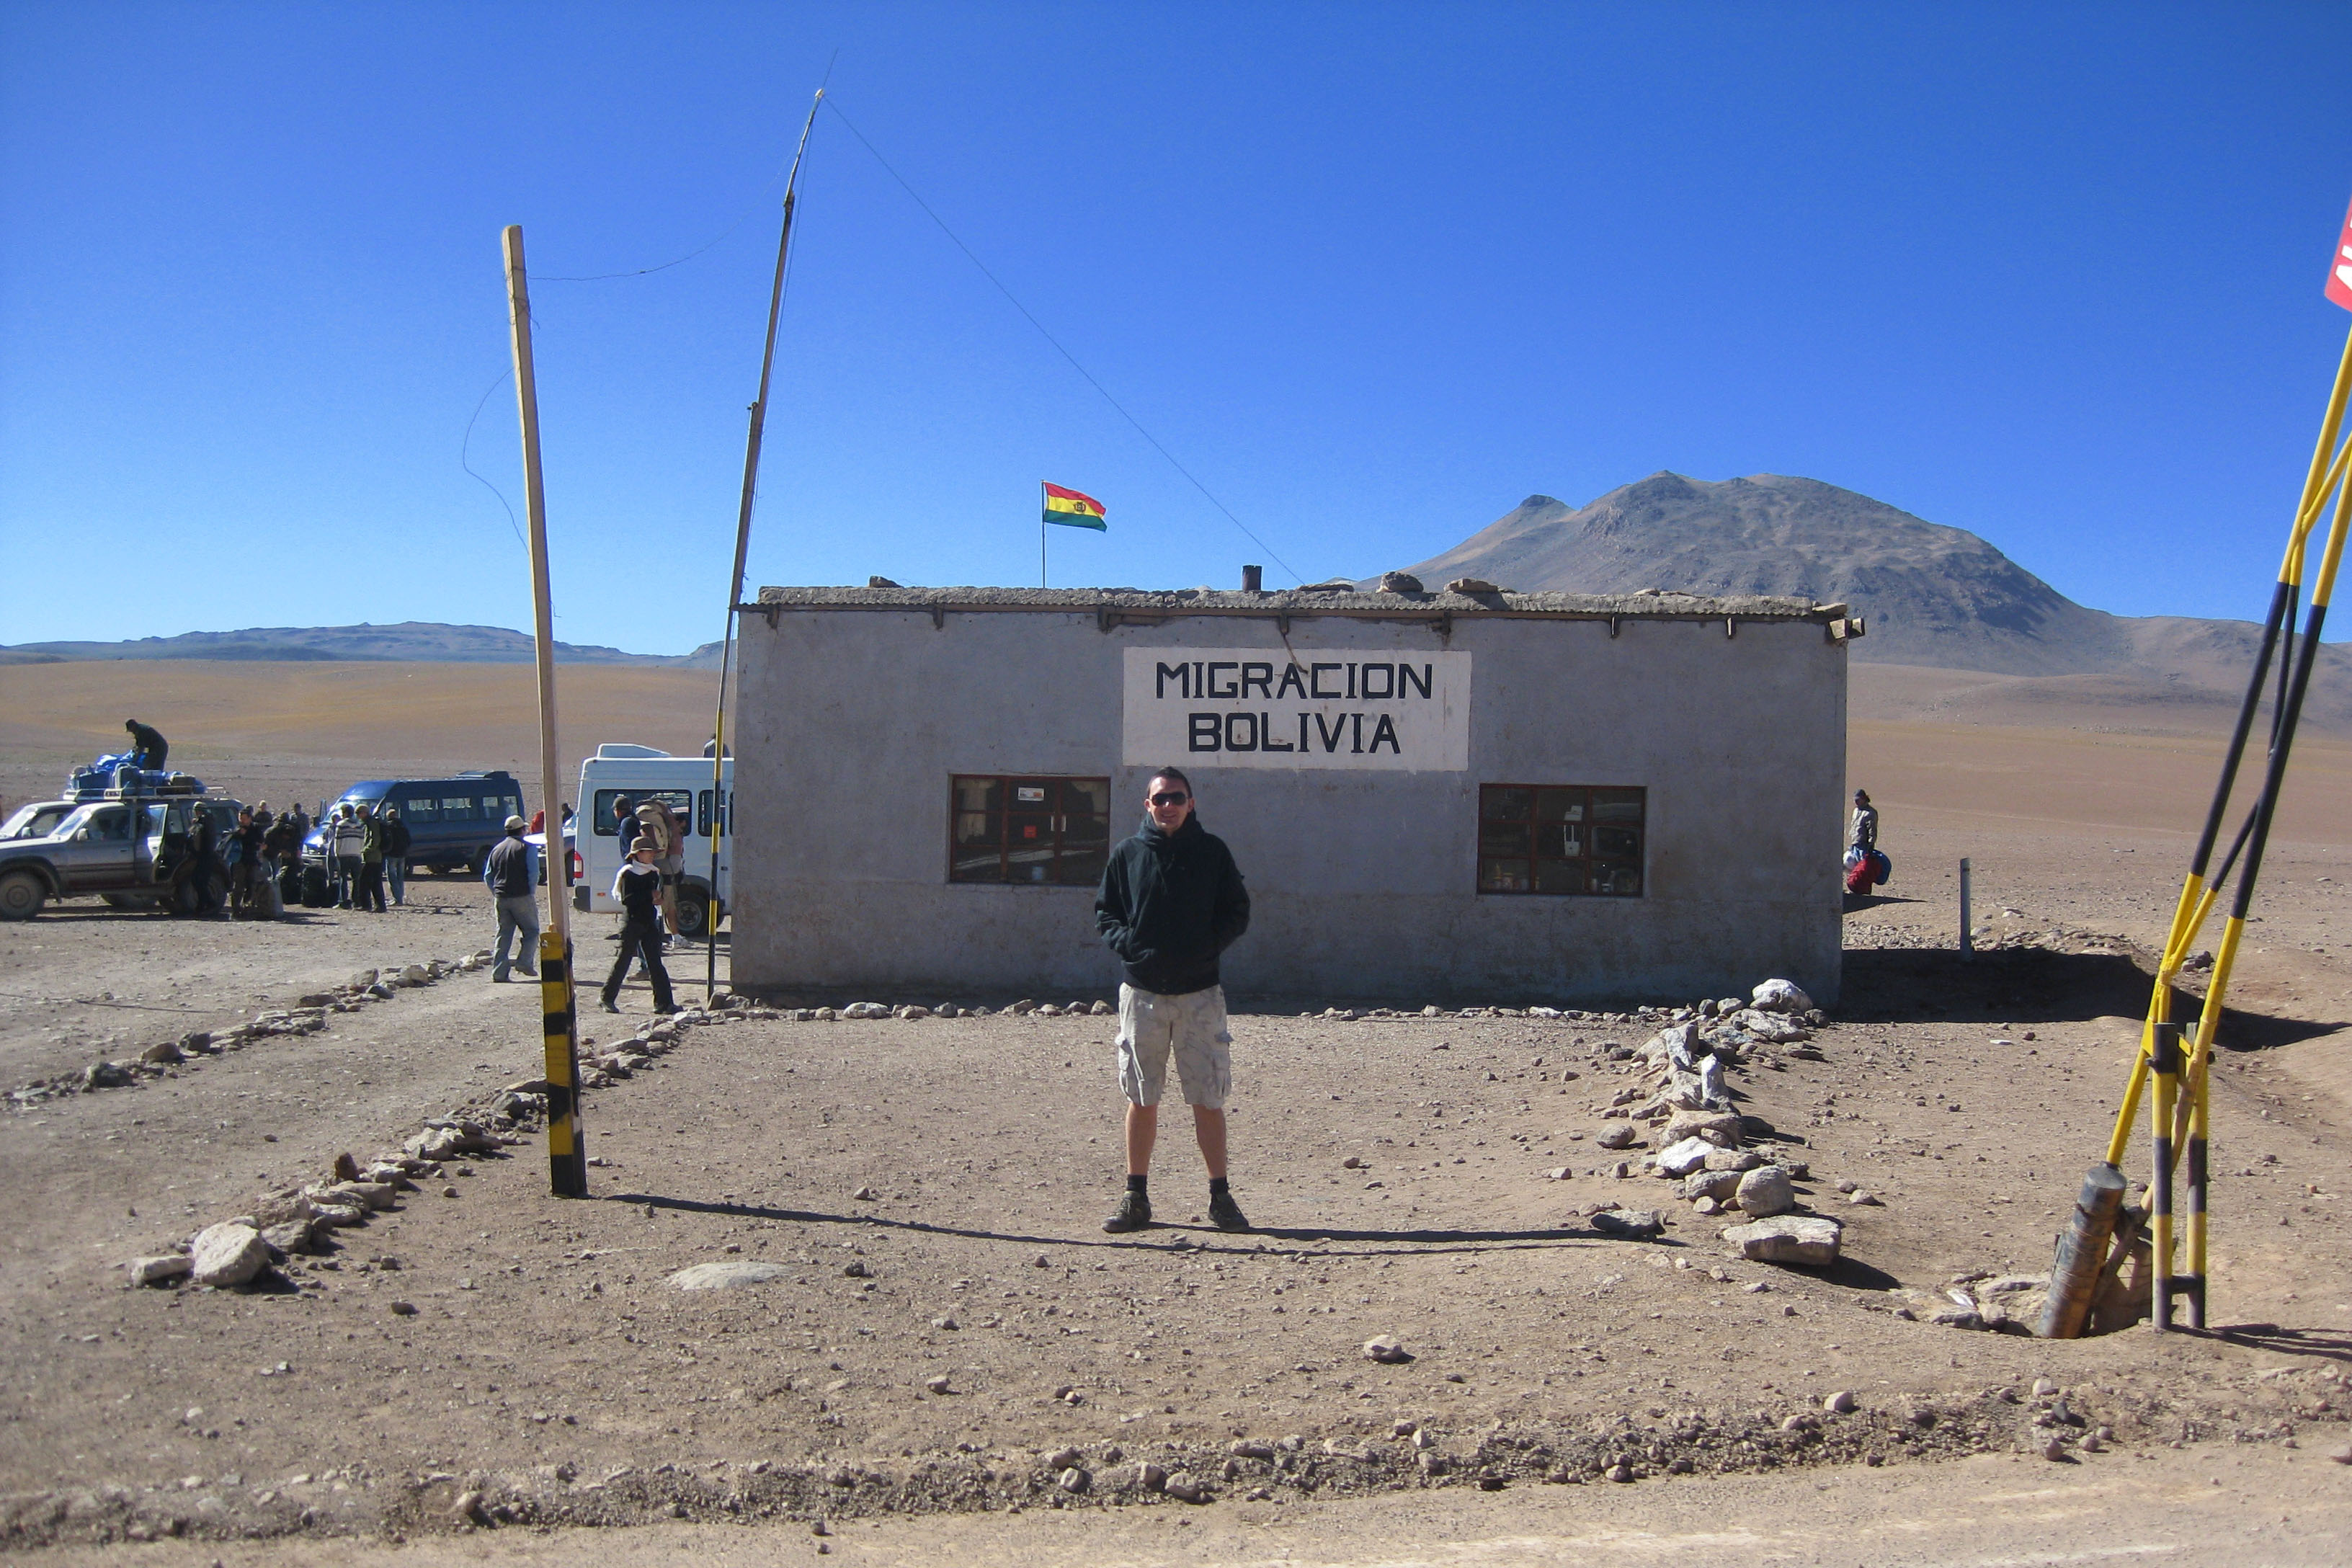 Crossing over the border into Bolivia